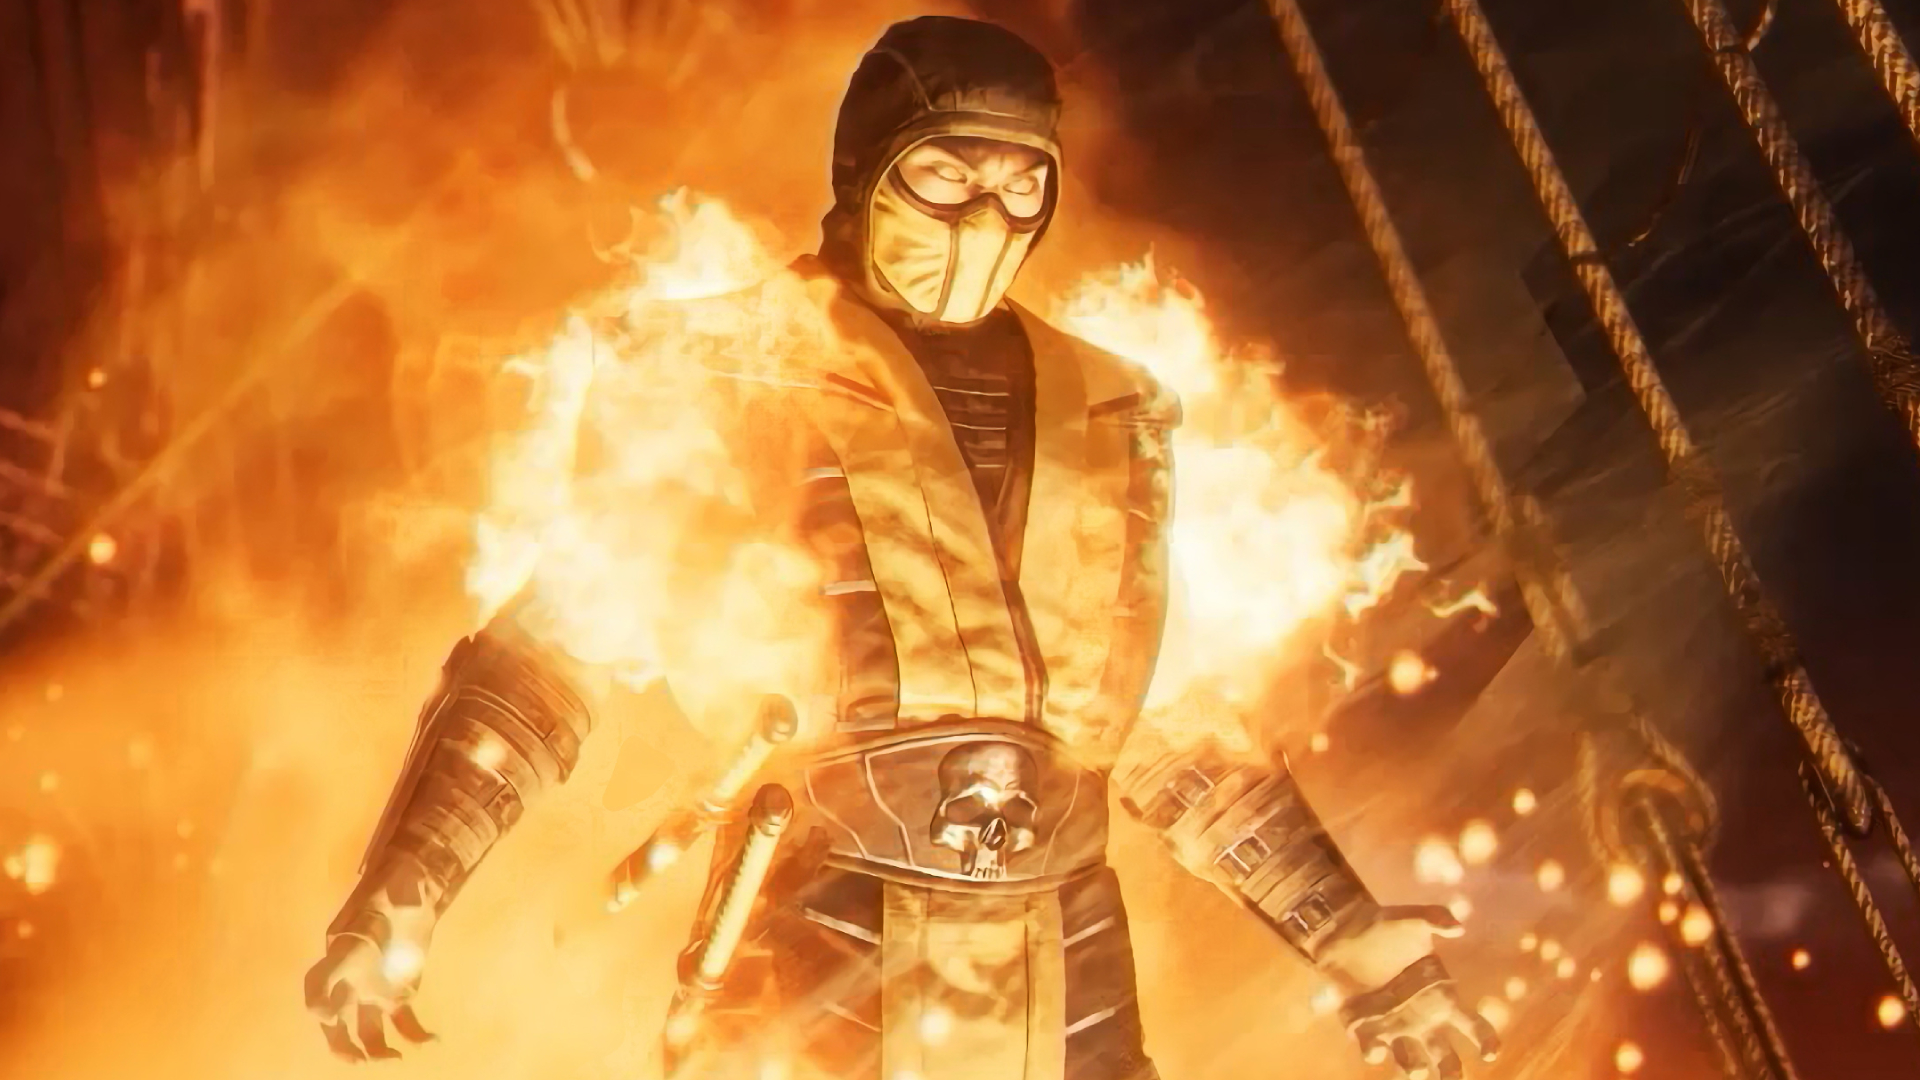 Scorpion in his classic uniform on fire